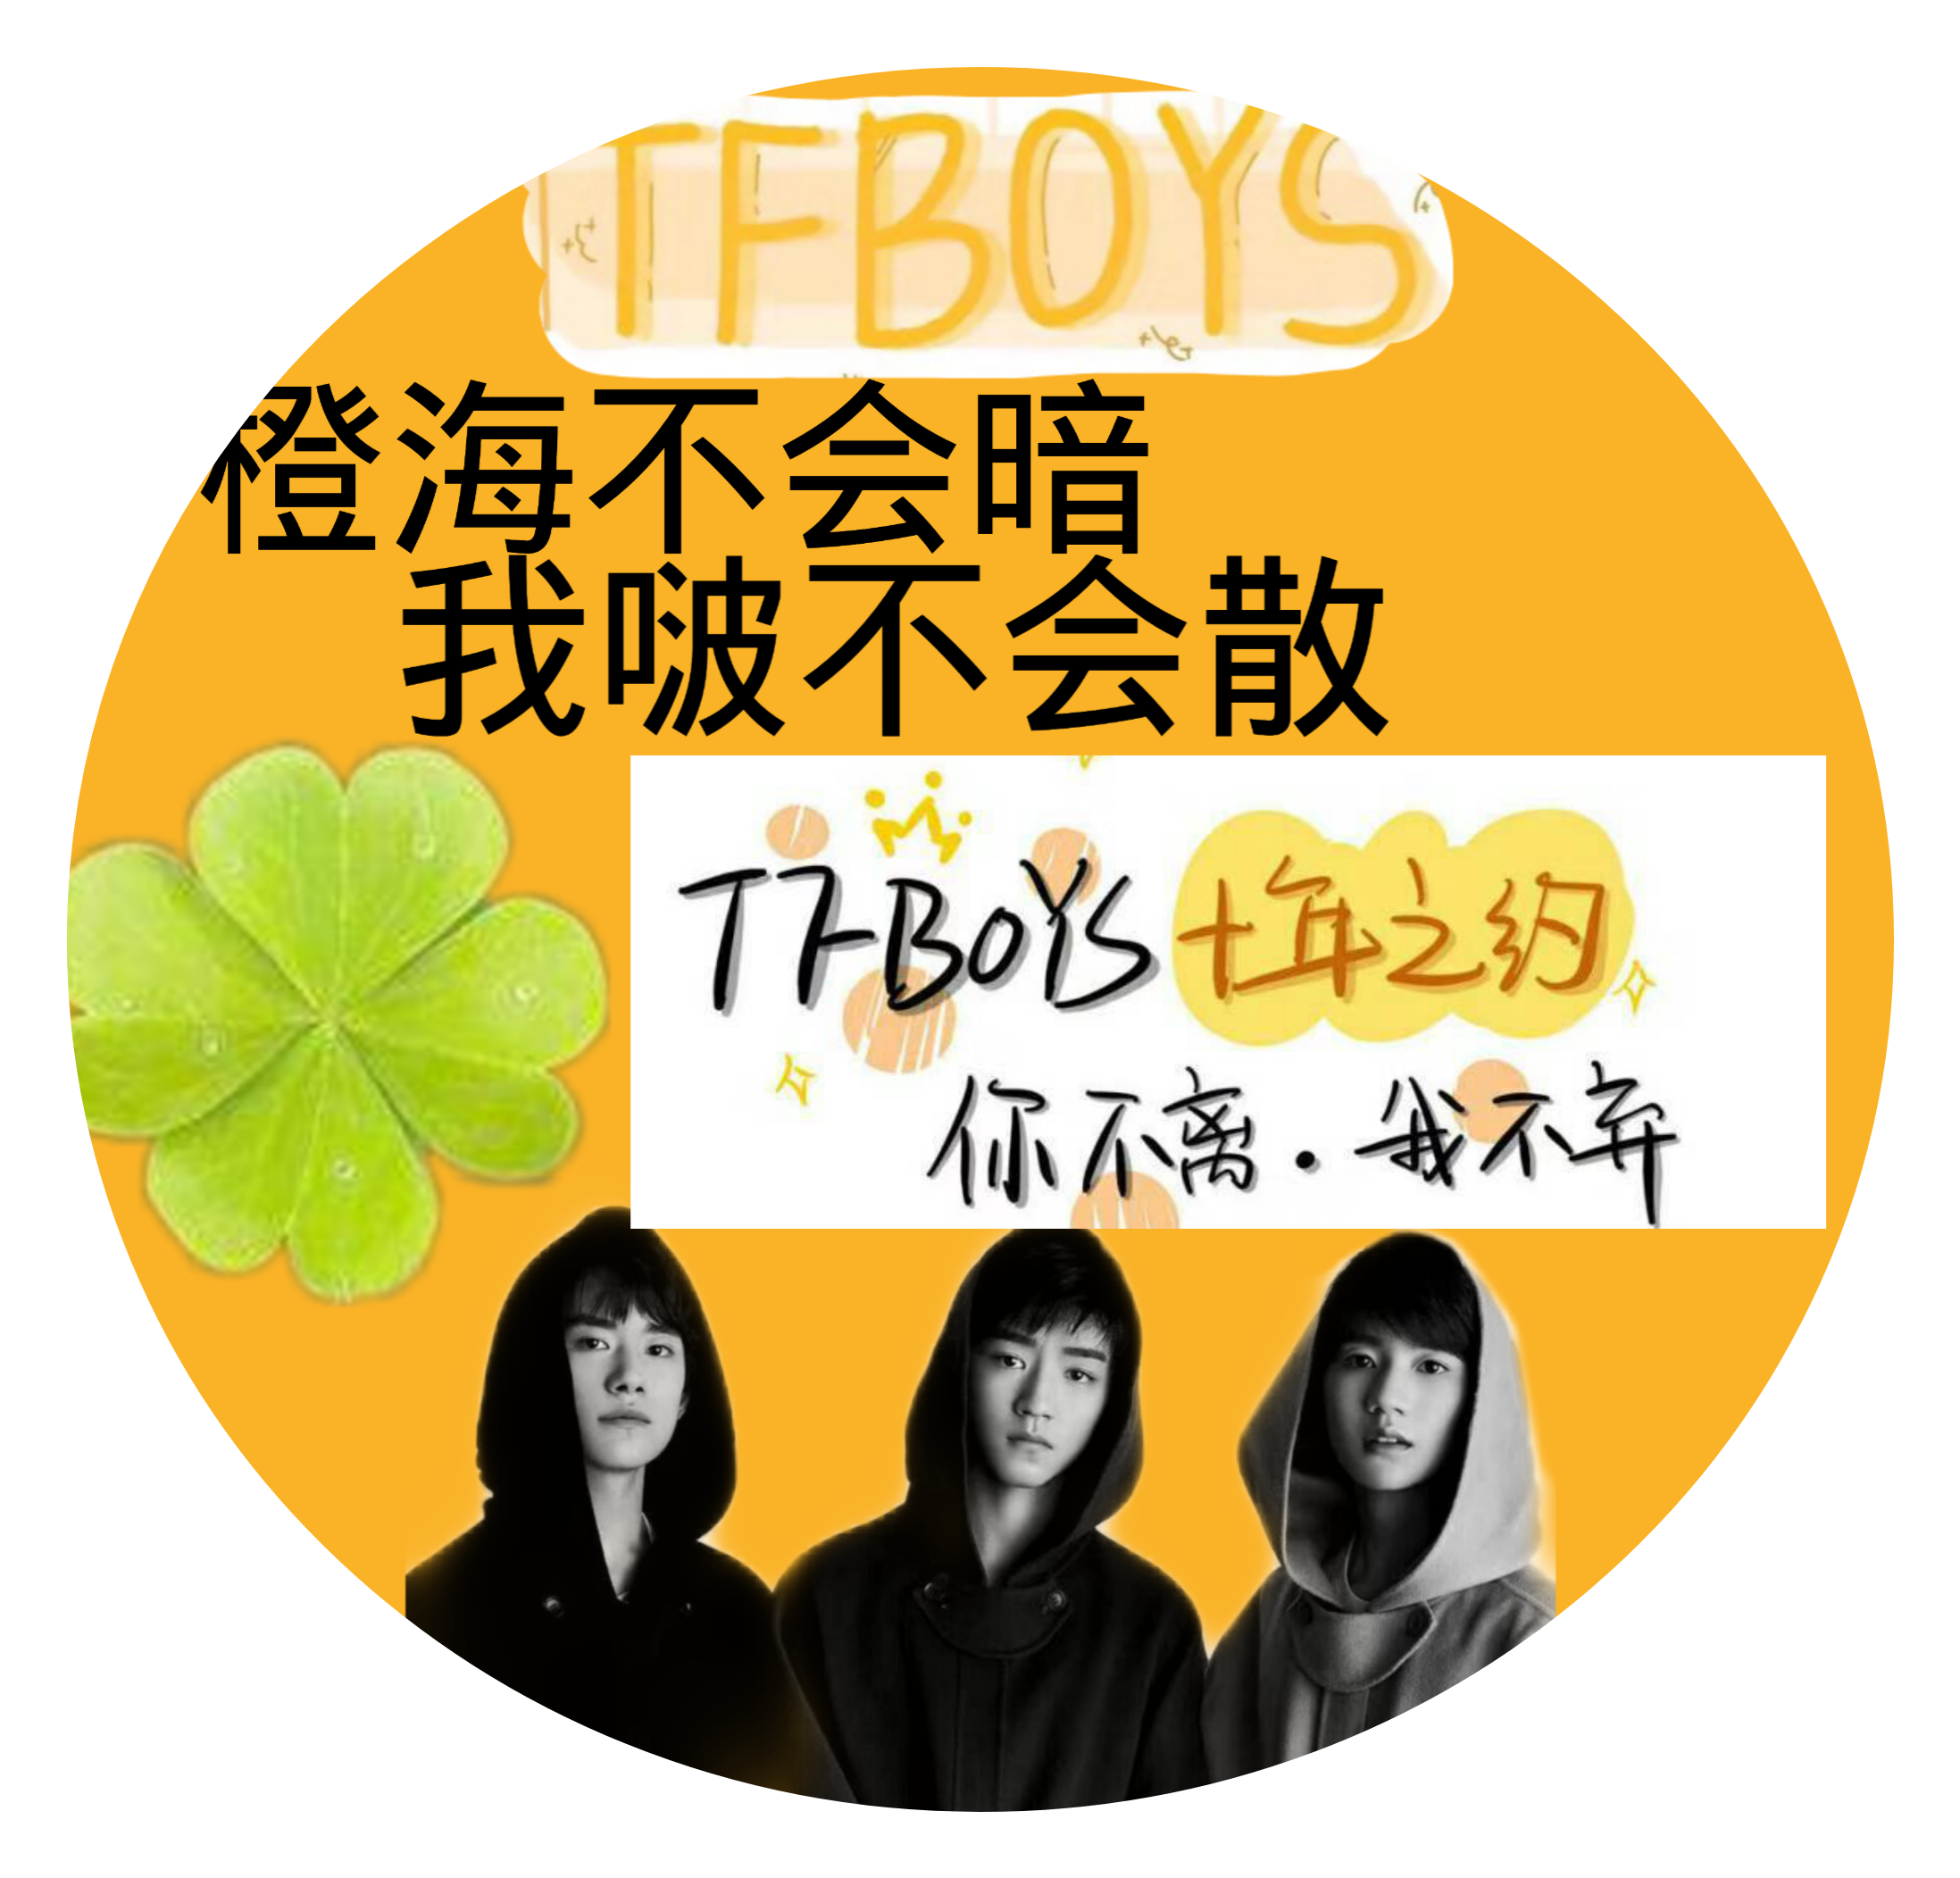 tfboys freetoedit #tfboys sticker by @dingkaihe